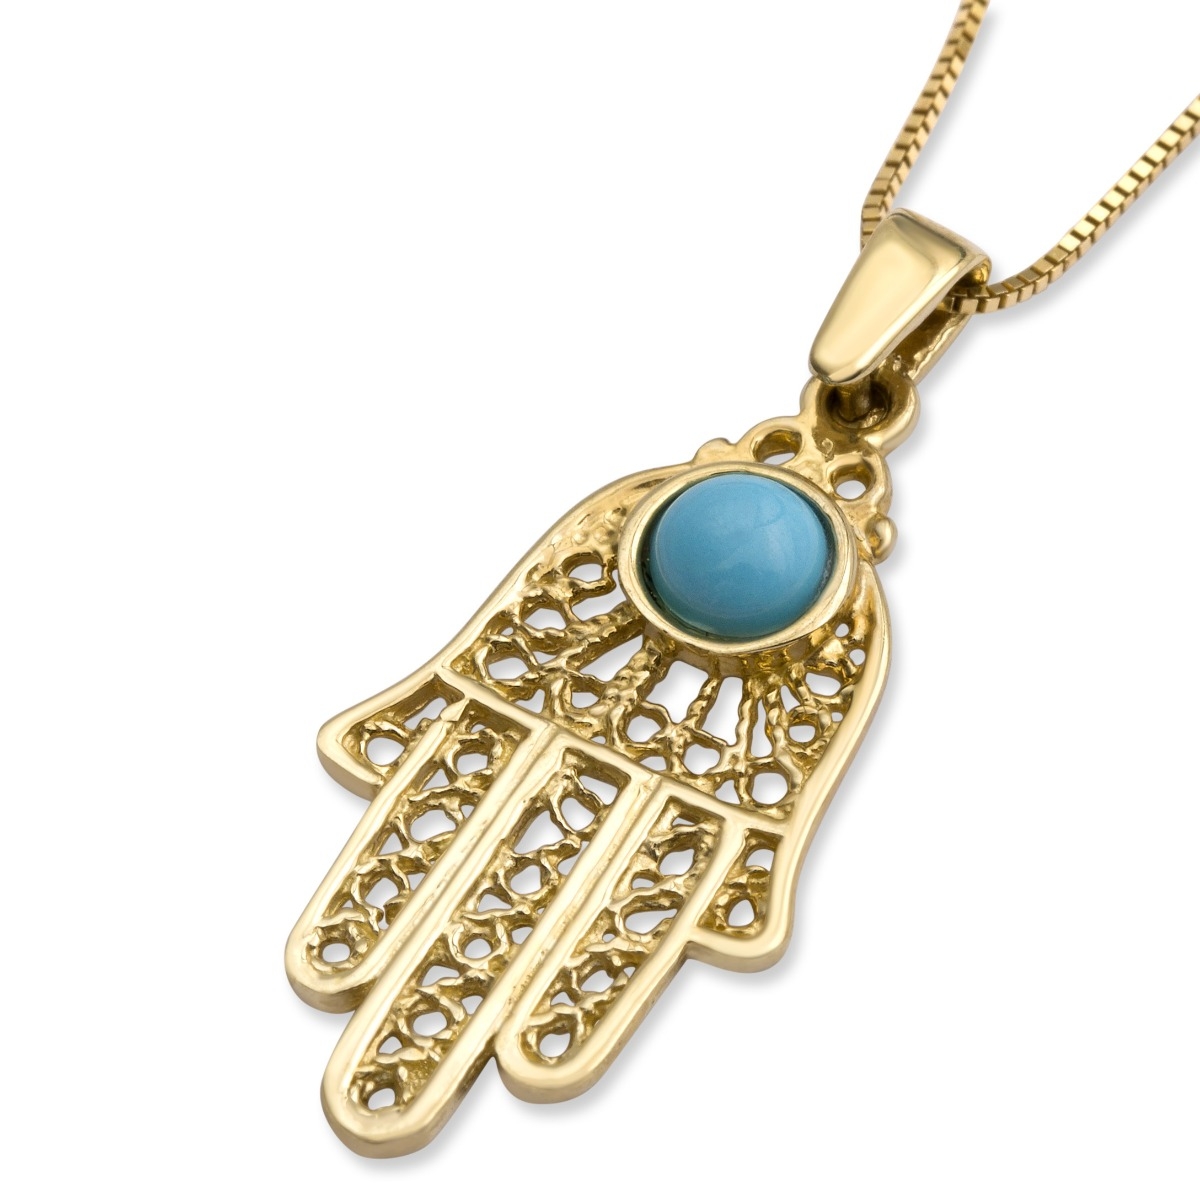 Large 14K Yellow Gold Filigree Hamsa Pendant Necklace With Turquoise Stone - 1